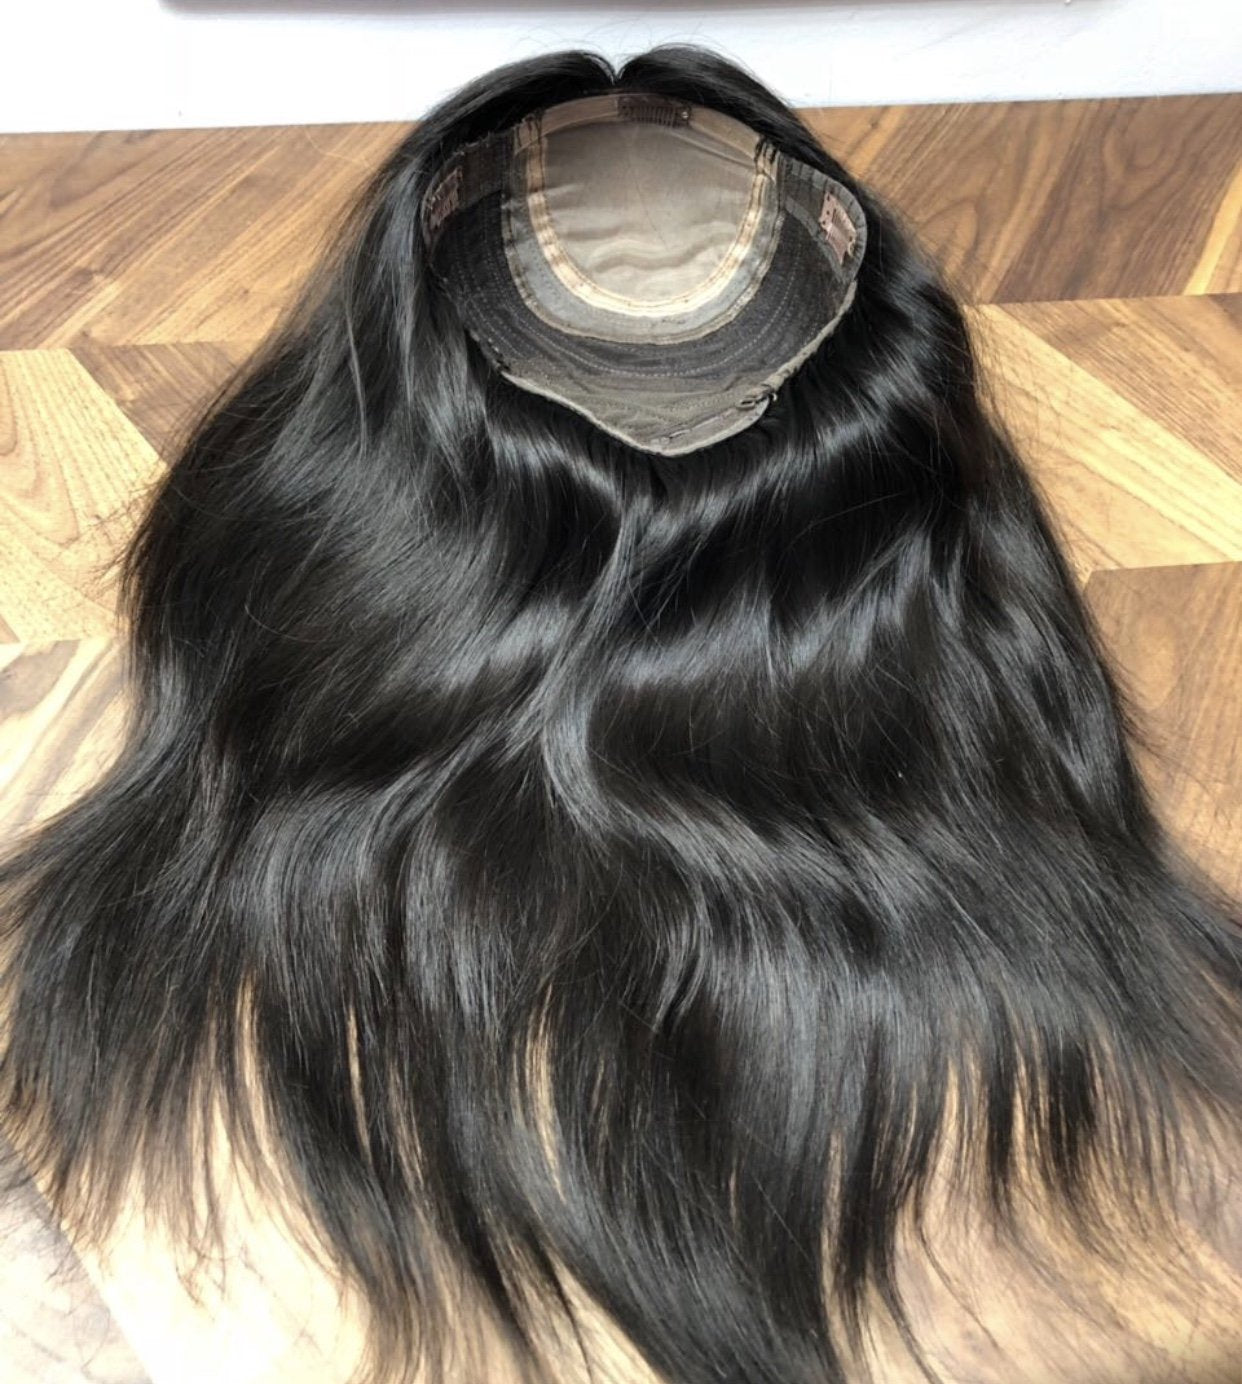 Wigs Ombre 8 and 14 Color GVA hair_Retail price - GVA hair